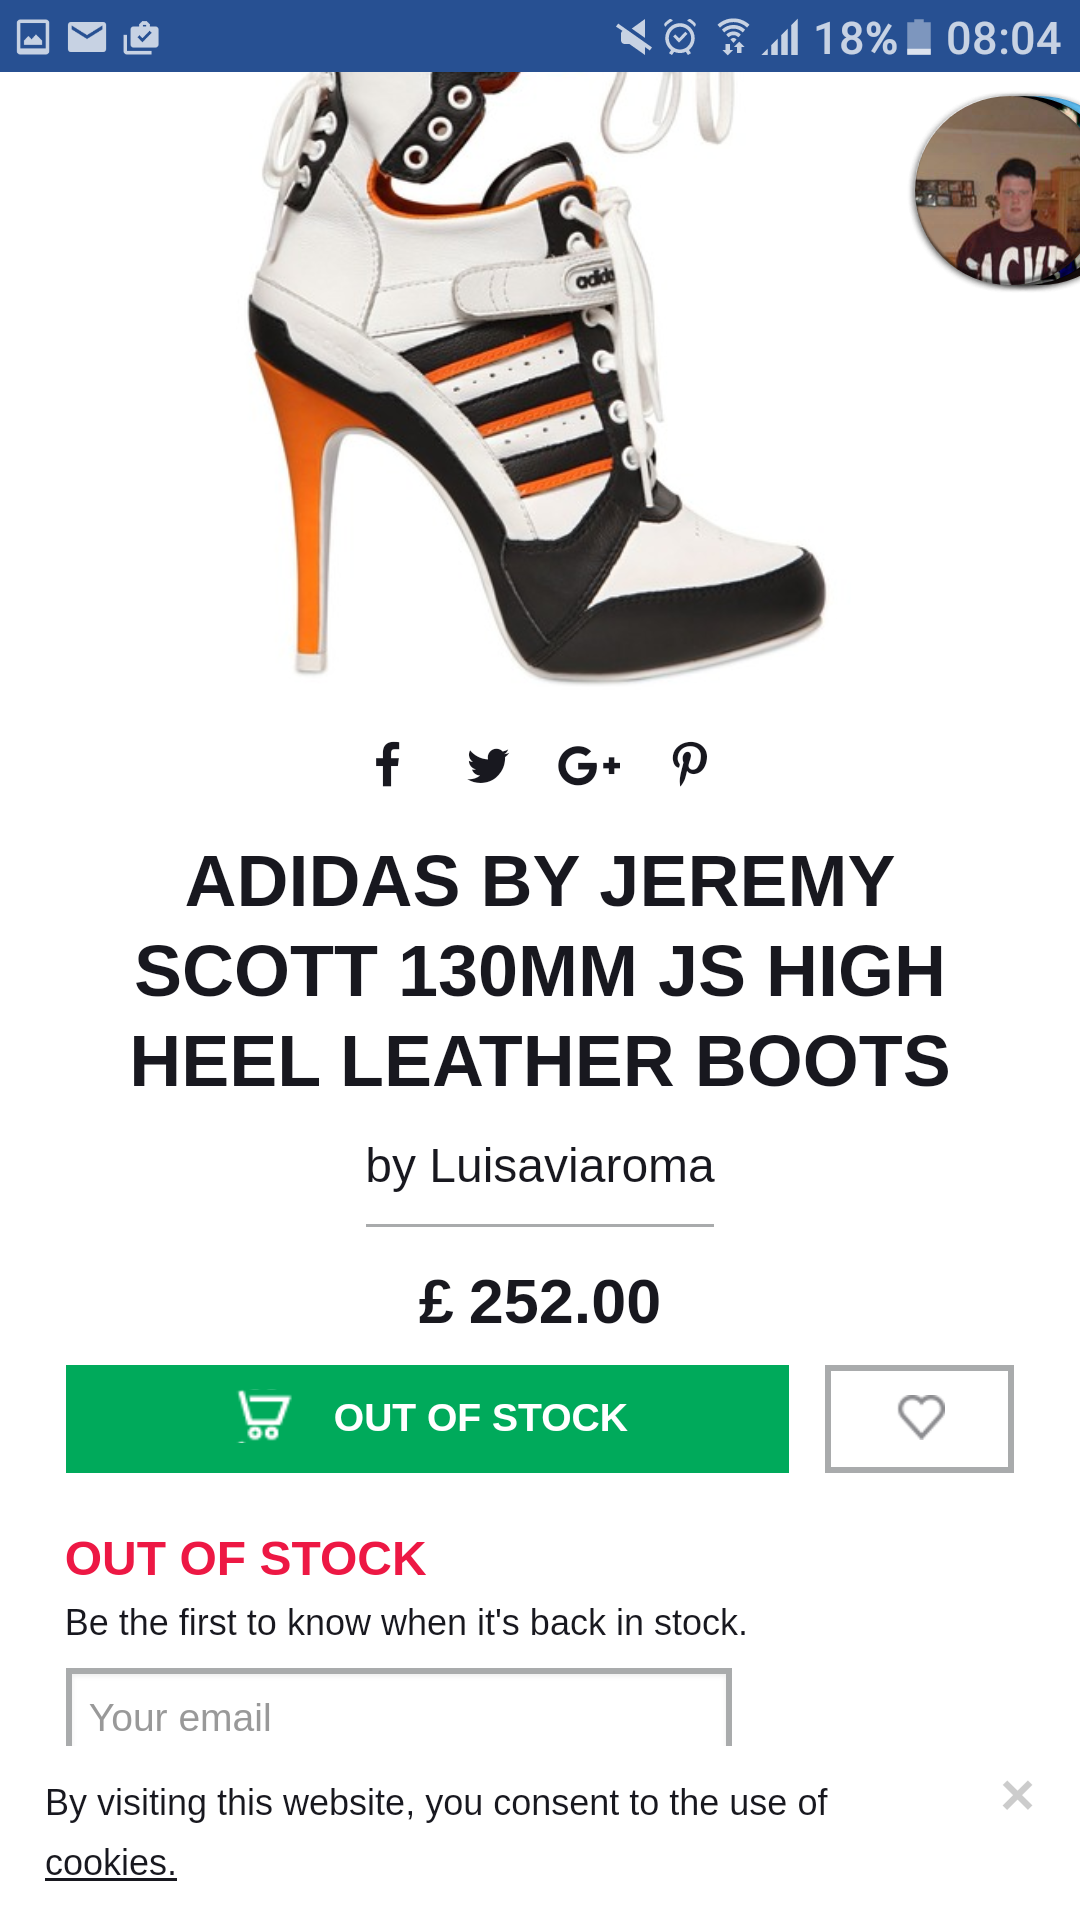 adidas by jeremy scott 130mm js high heel